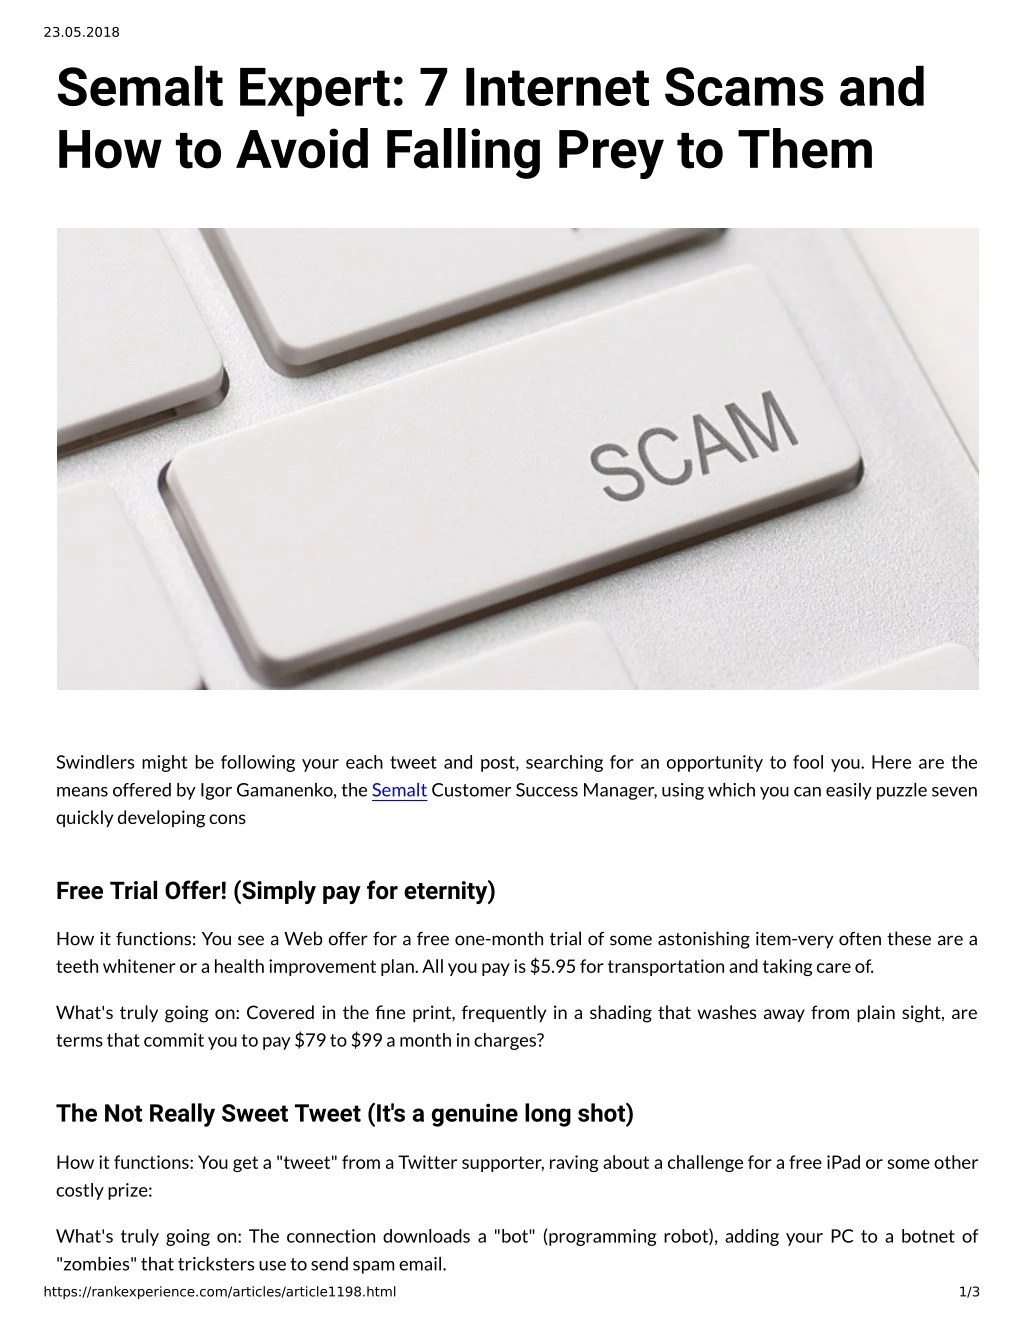 23 05 2018 semalt expert 7 internet scams